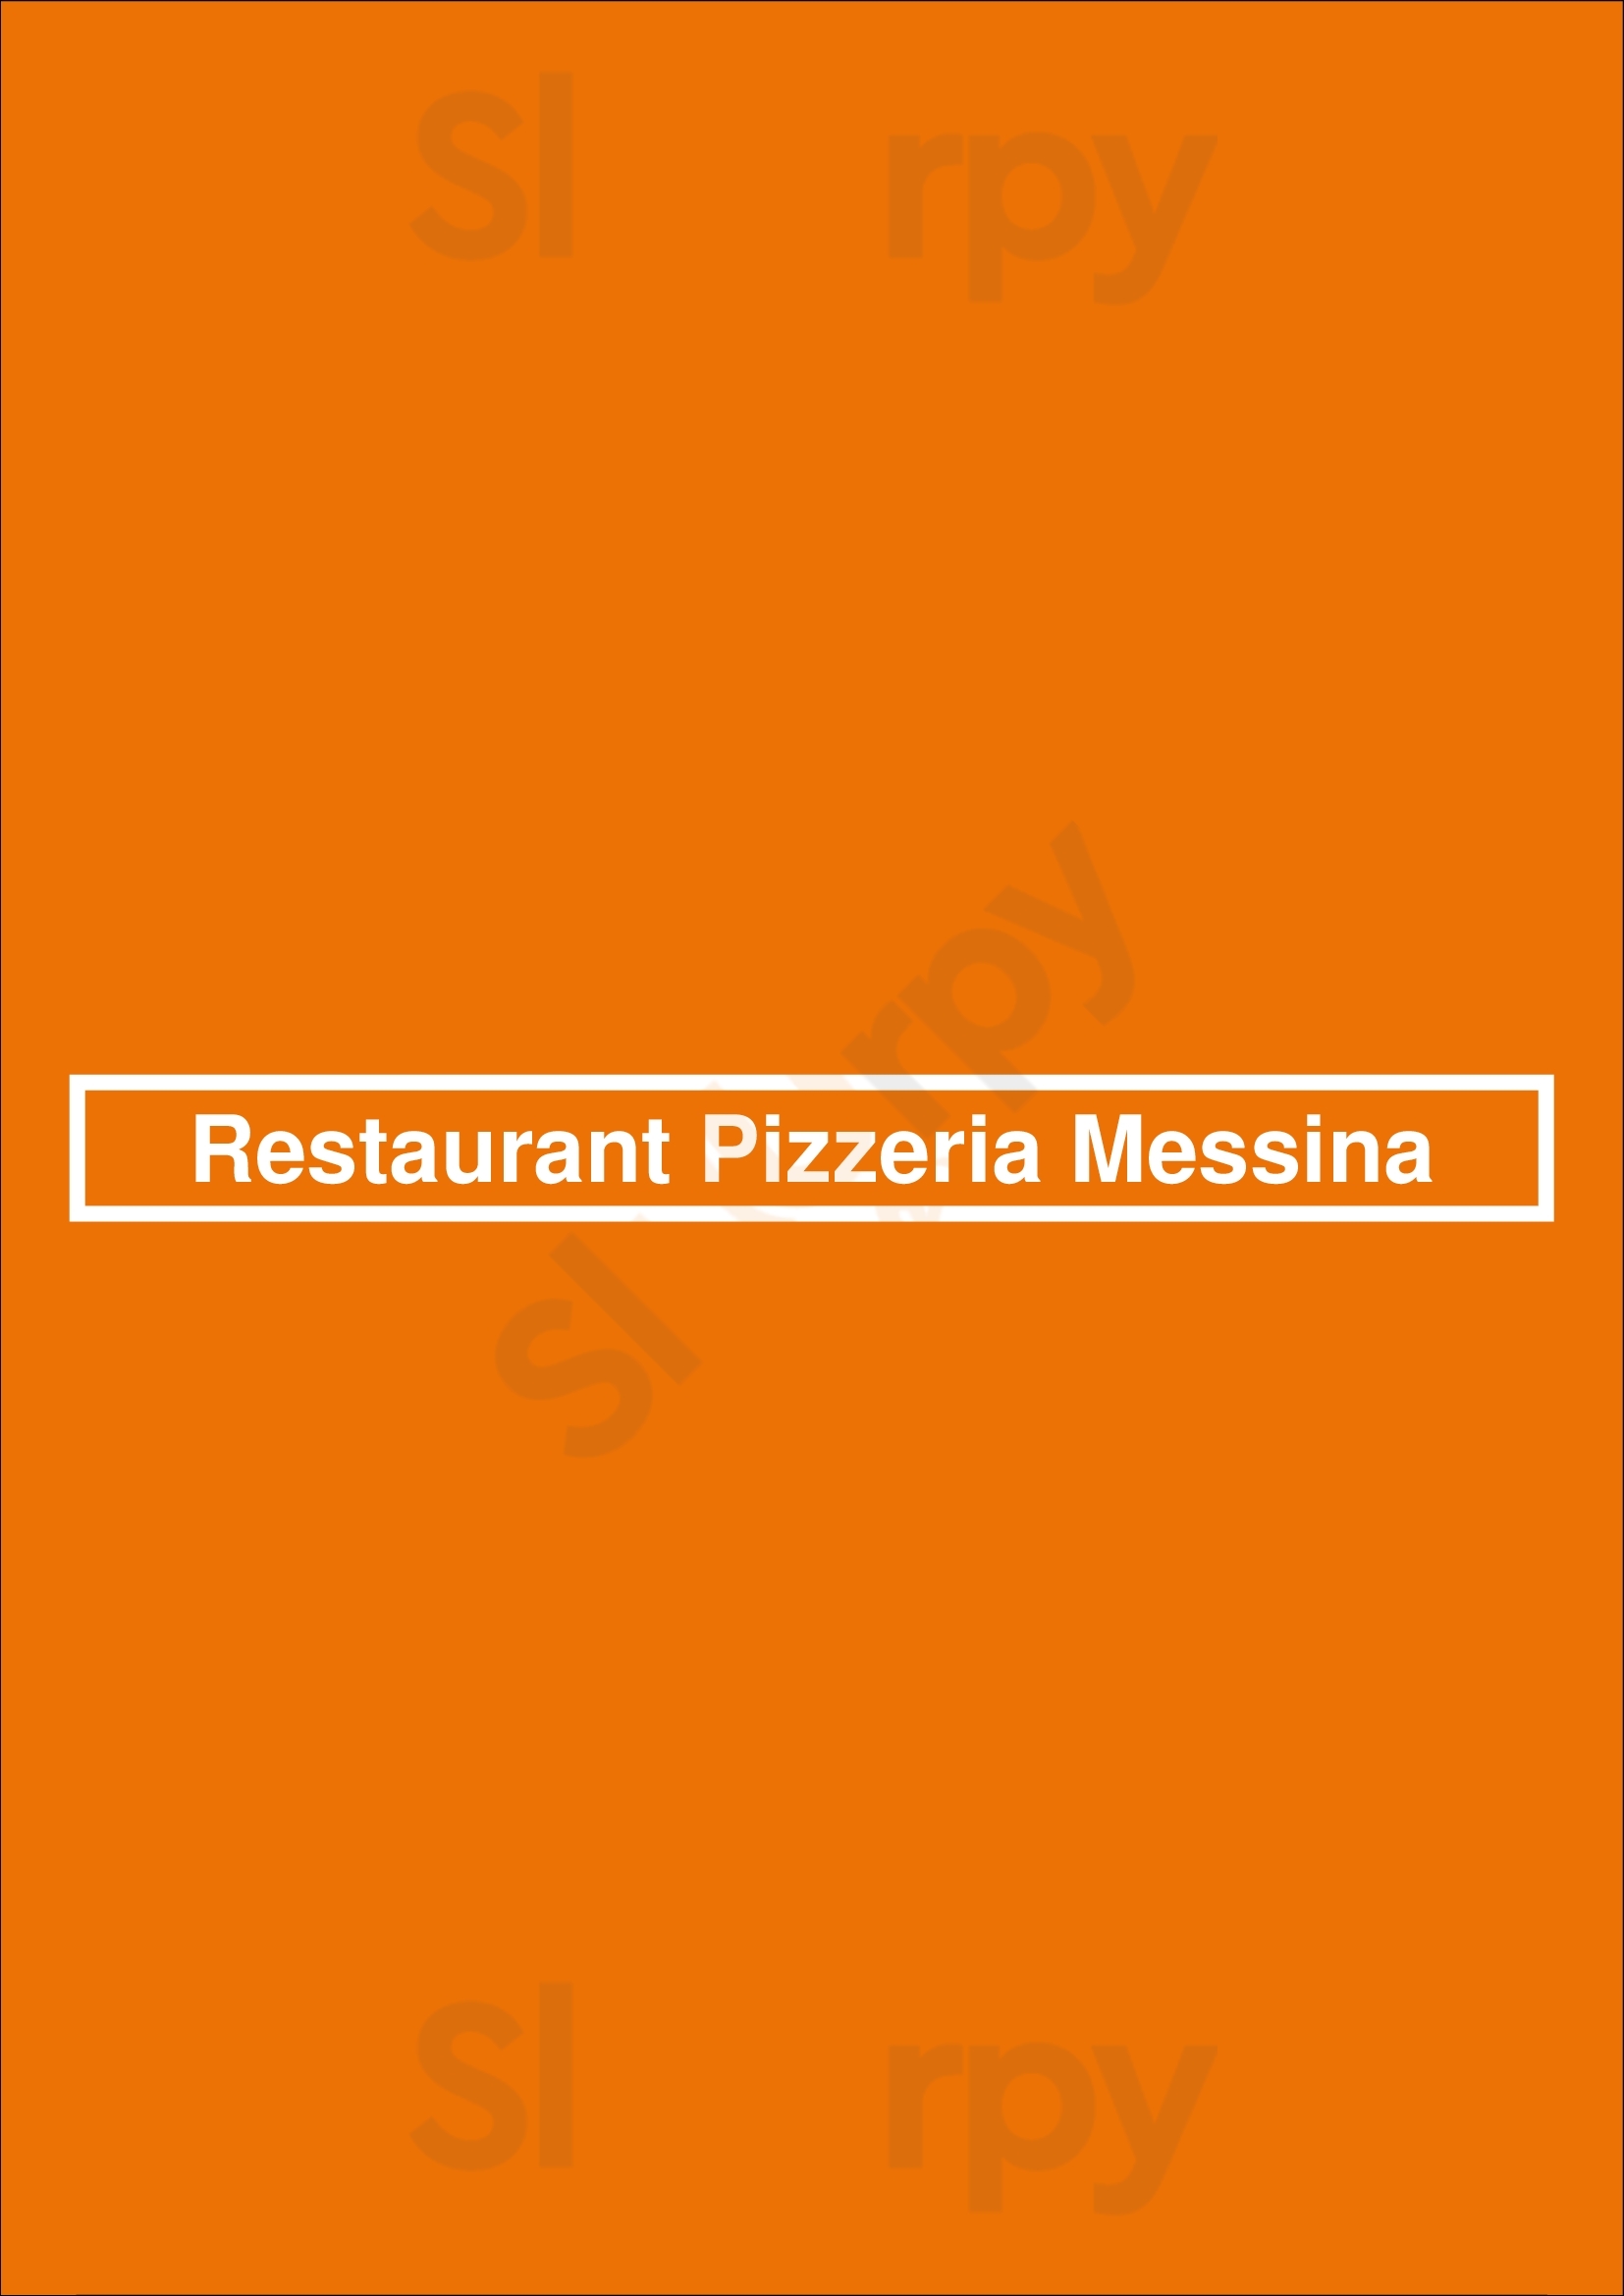 Restaurant Pizzeria Messina Rotterdam Menu - 1